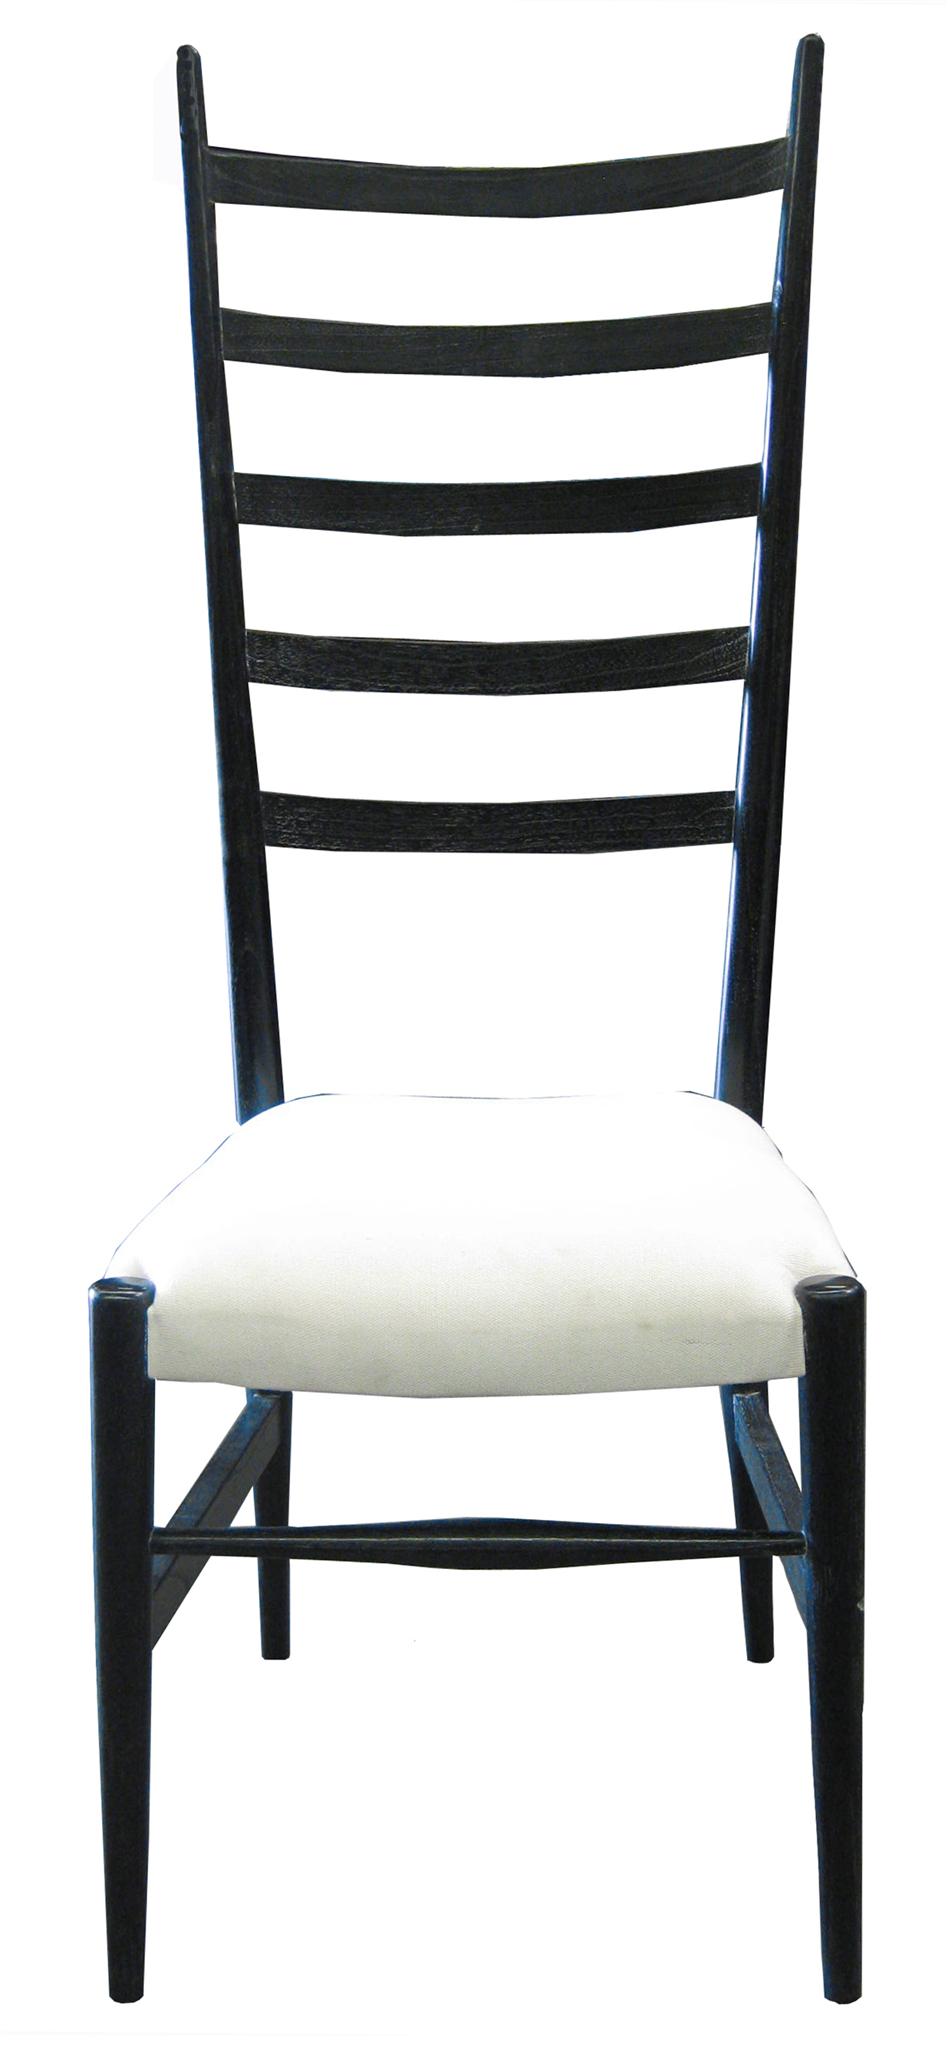 Noir Ladder Chair - Black